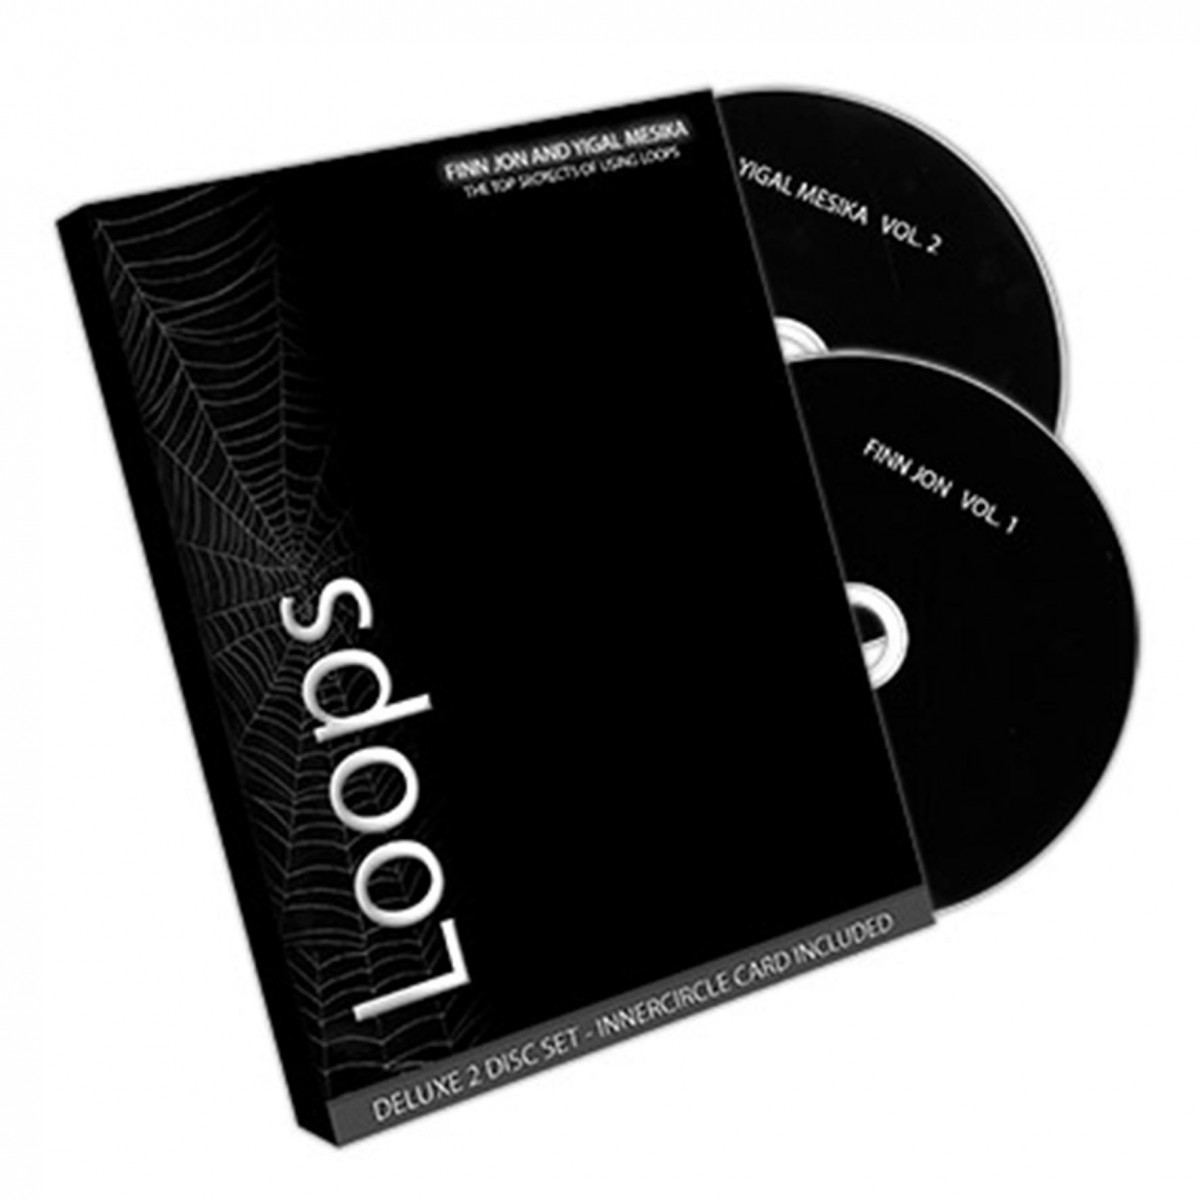 DVD Deluxe Set Loops di Yigal Mesika e Finn Jon